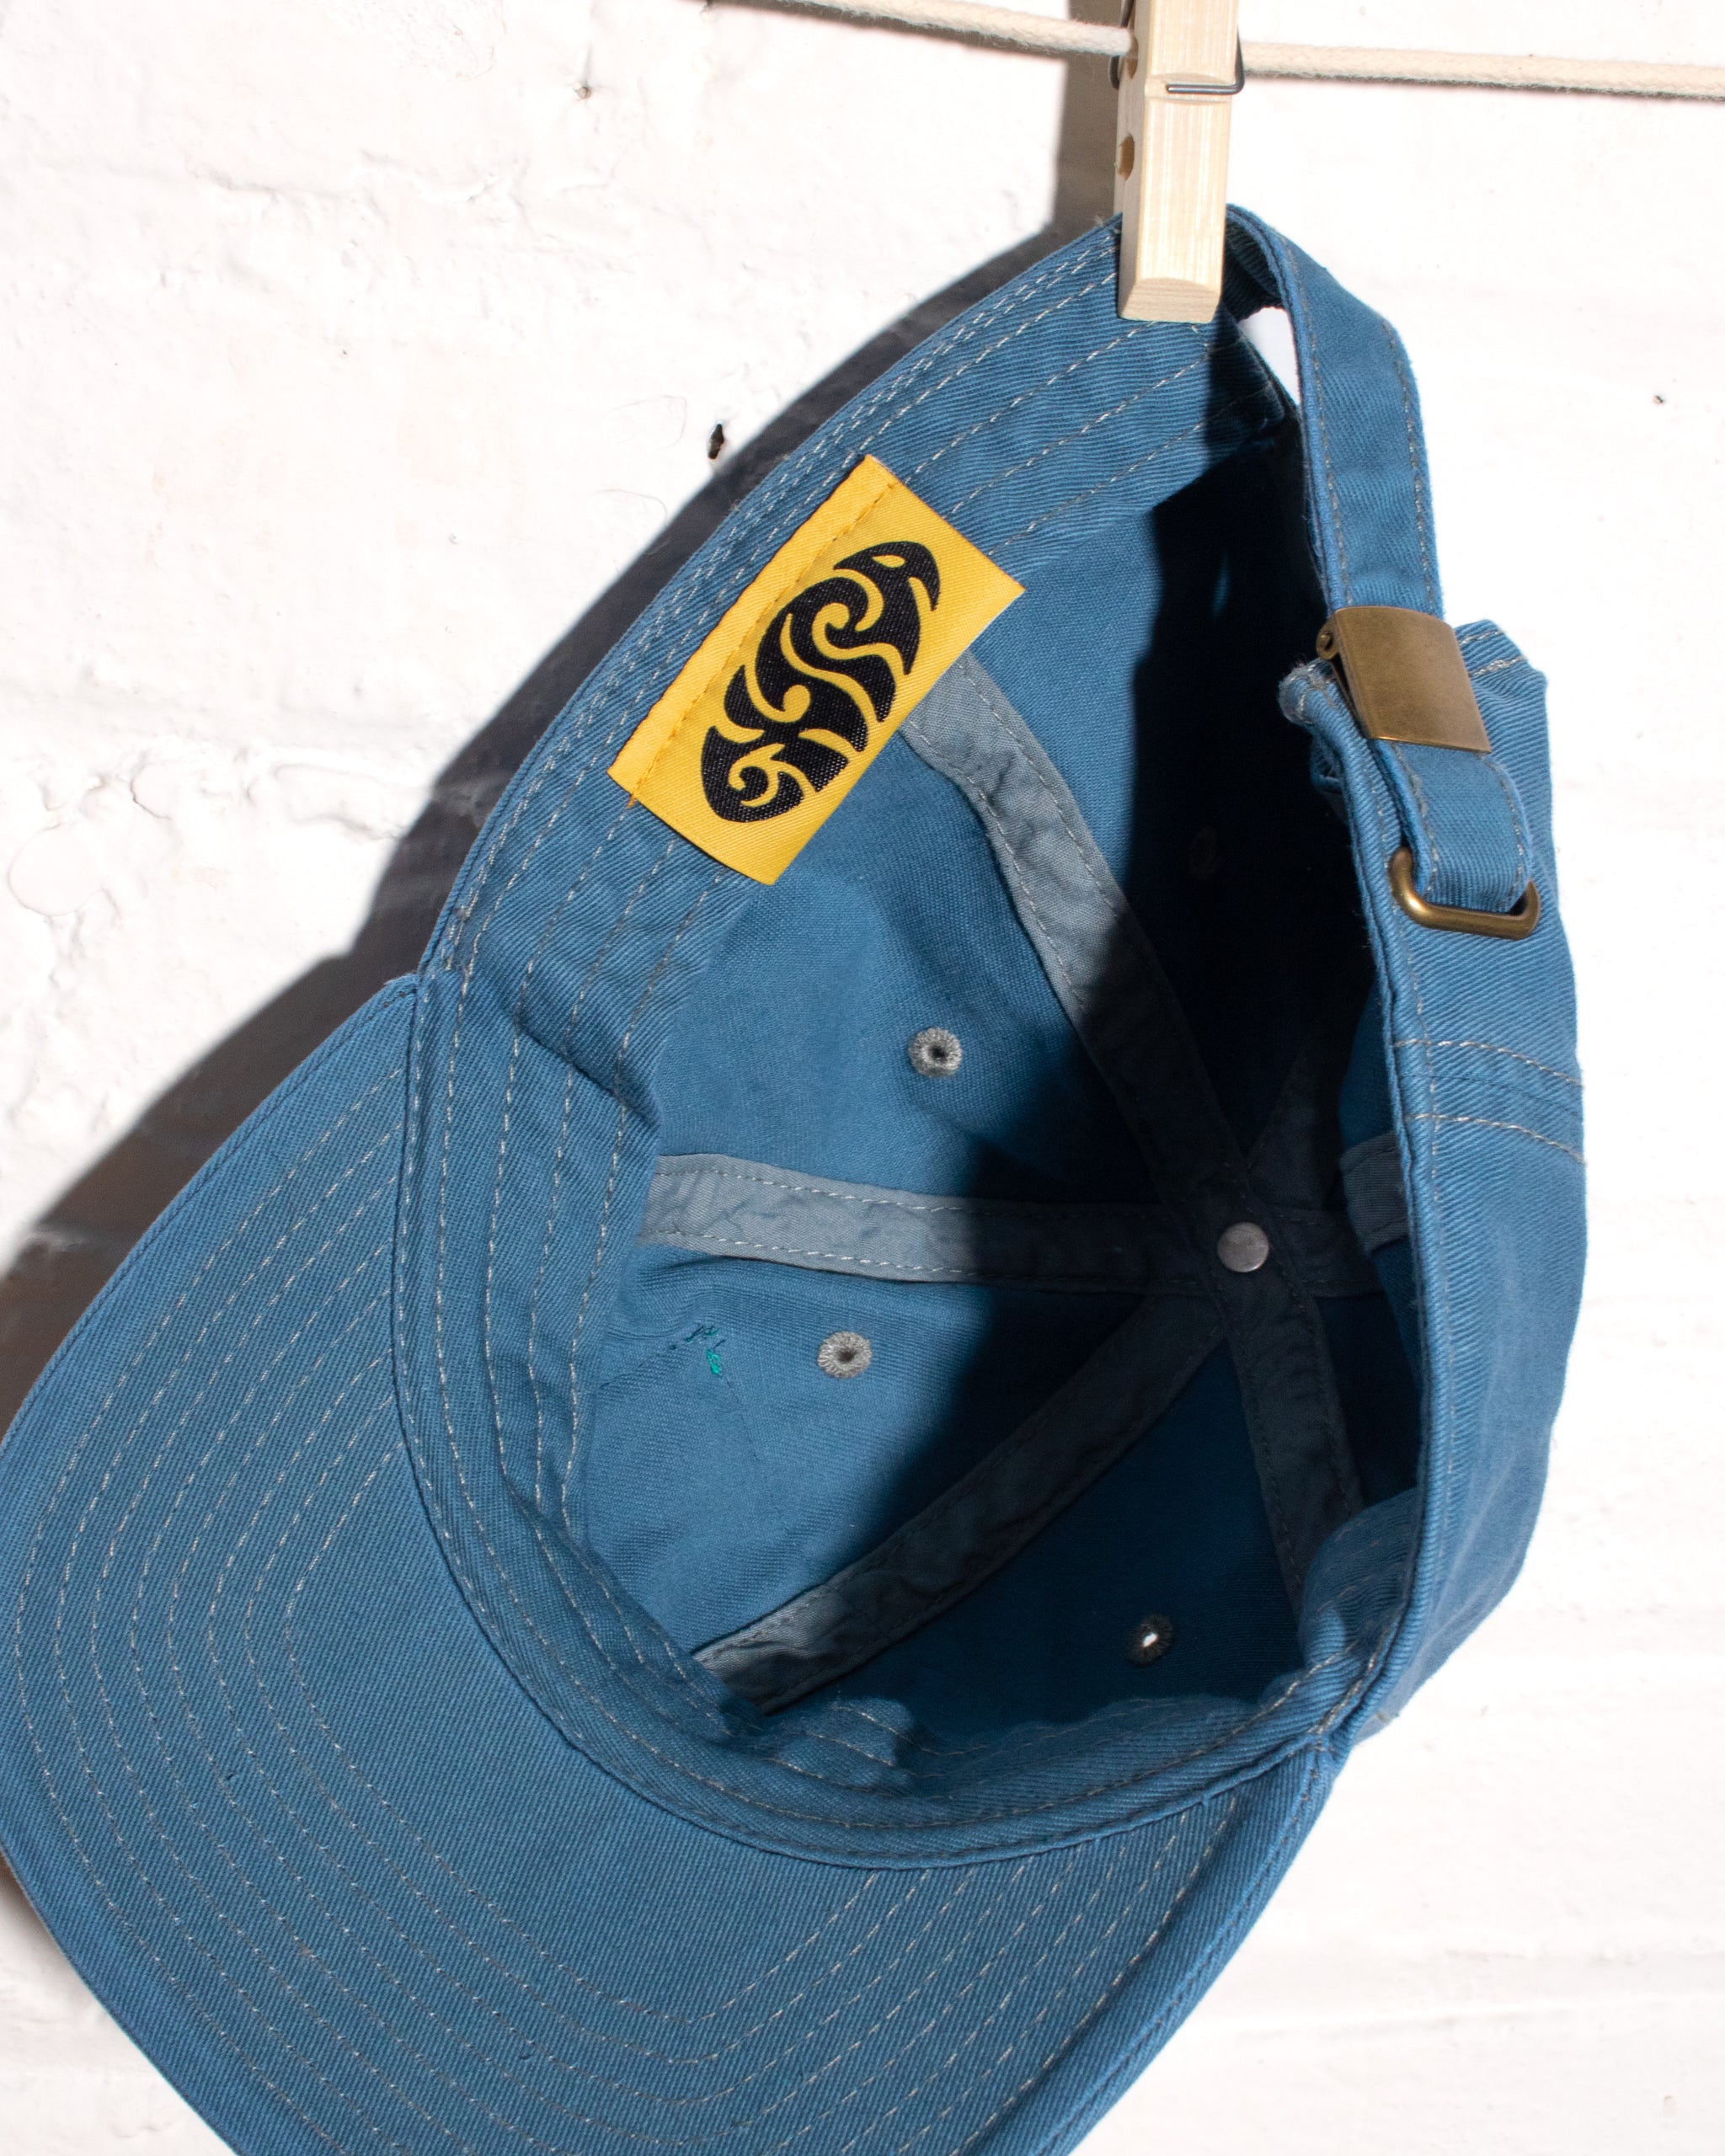 CAMP hat - blue